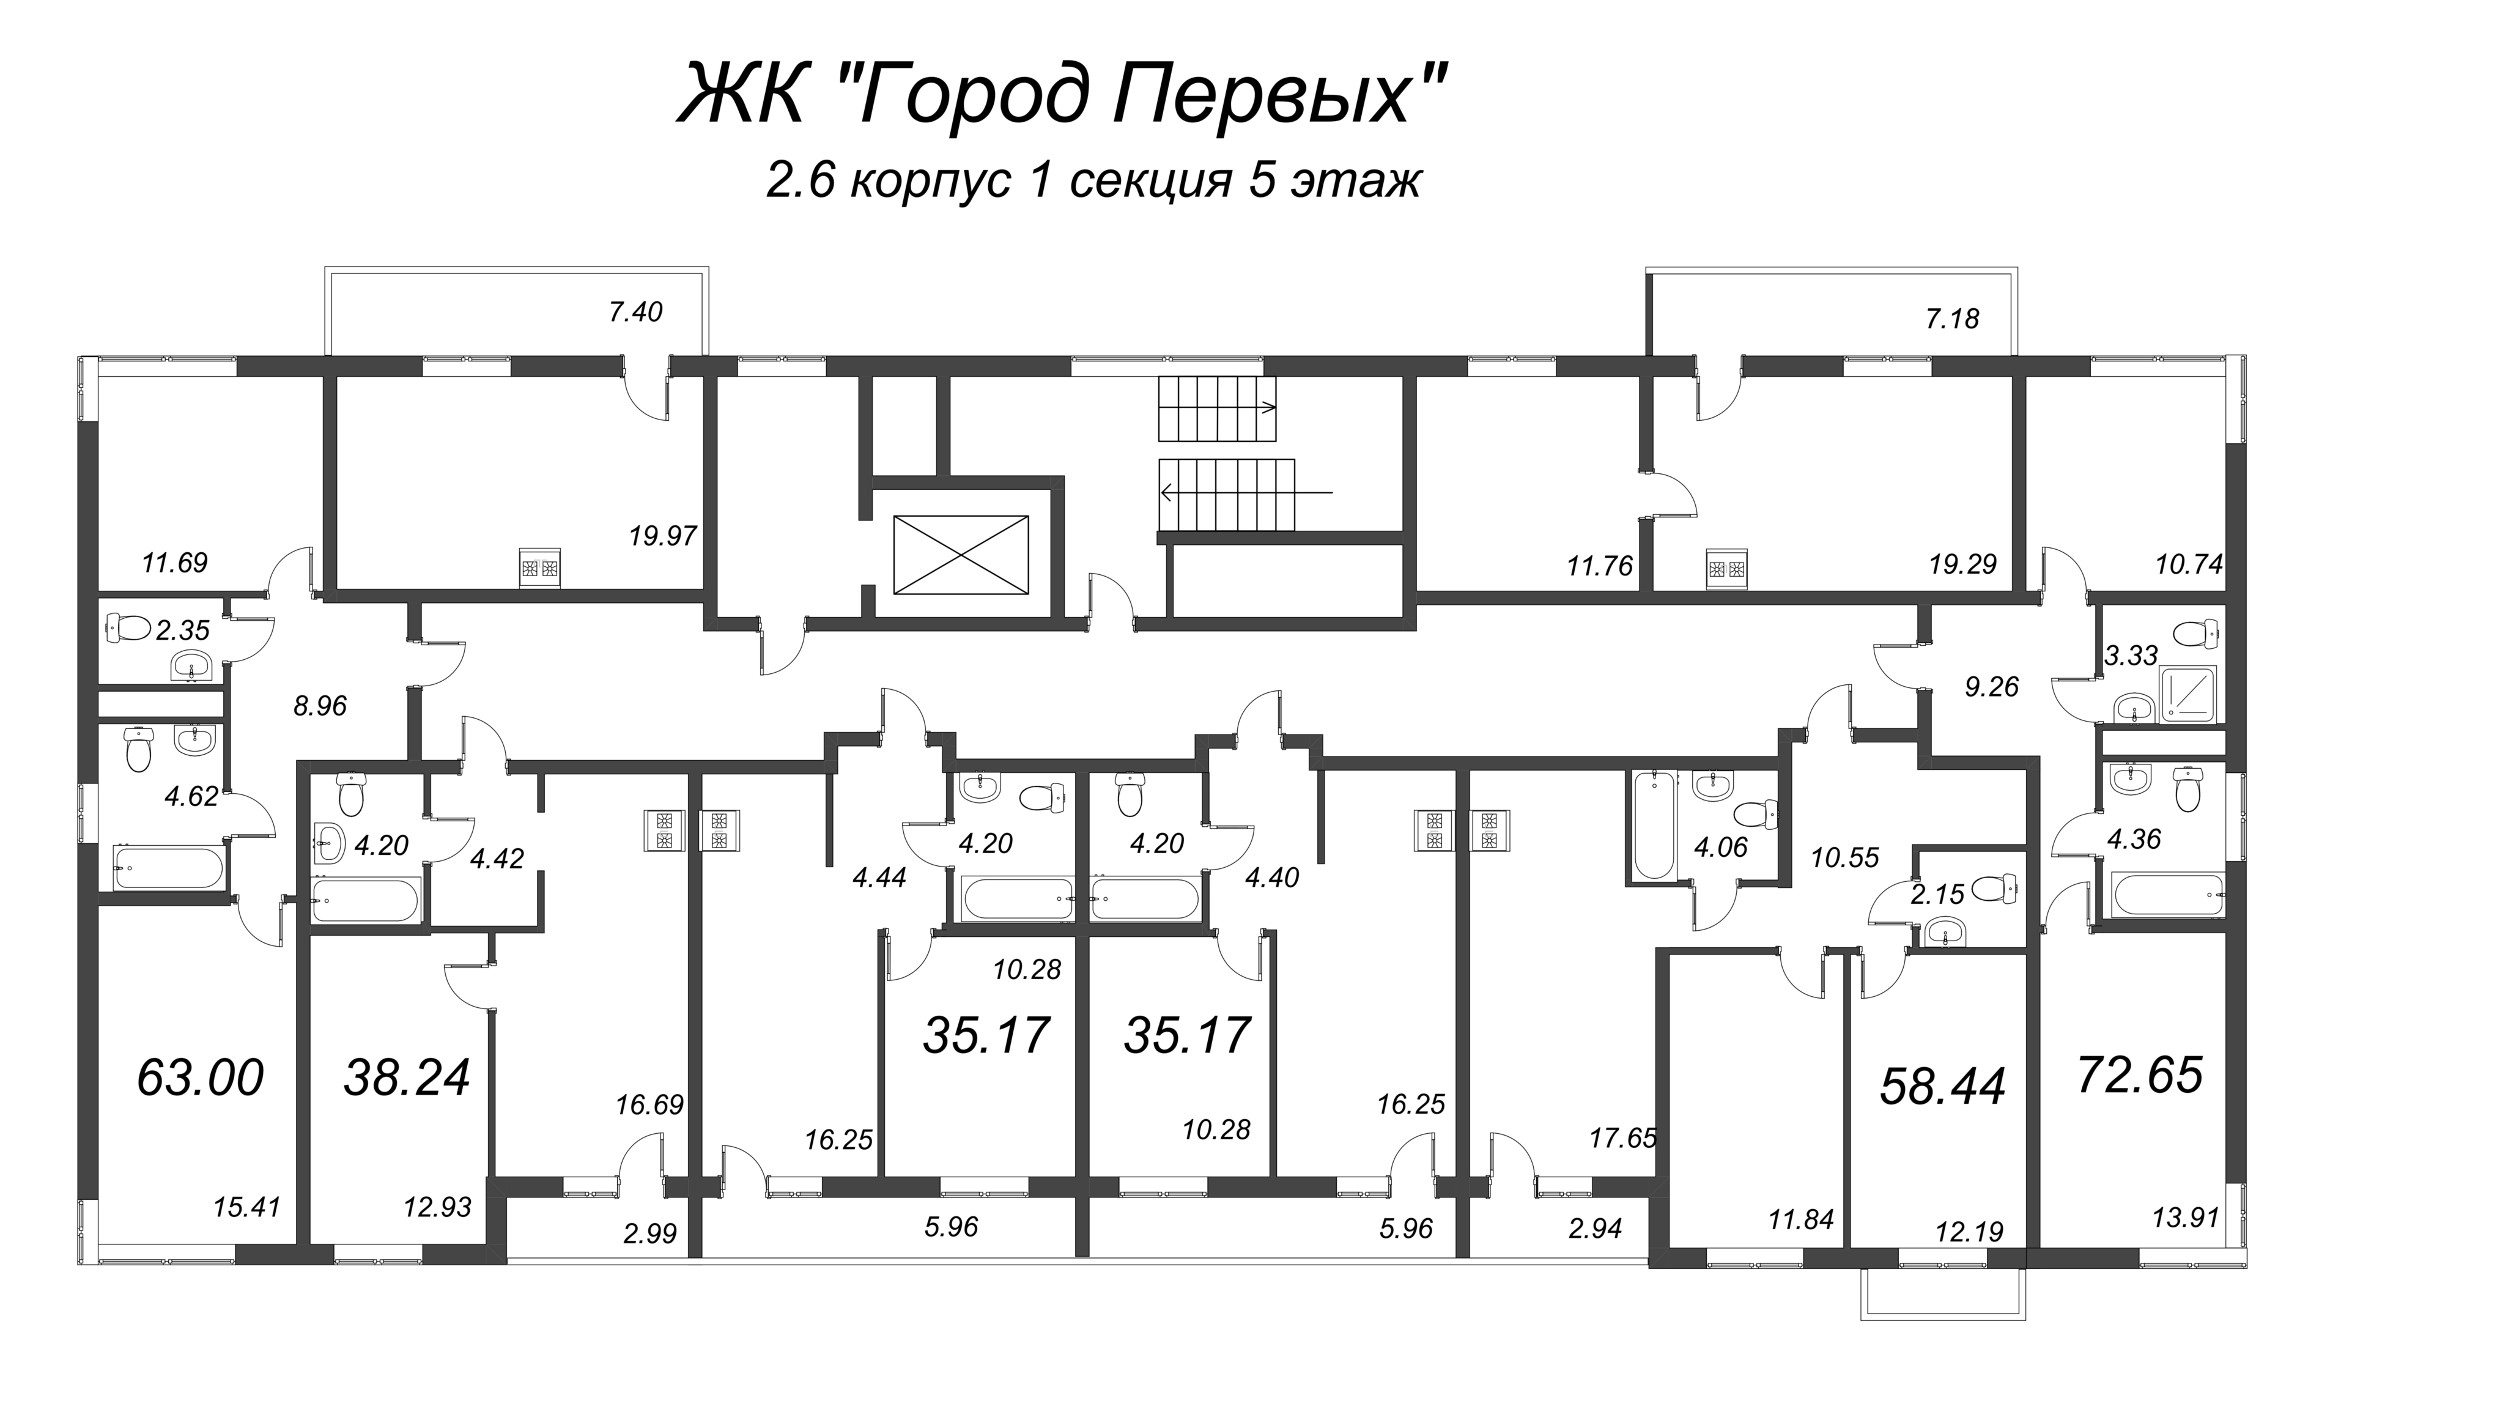 3-комнатная (Евро) квартира, 54.62 м² - планировка этажа